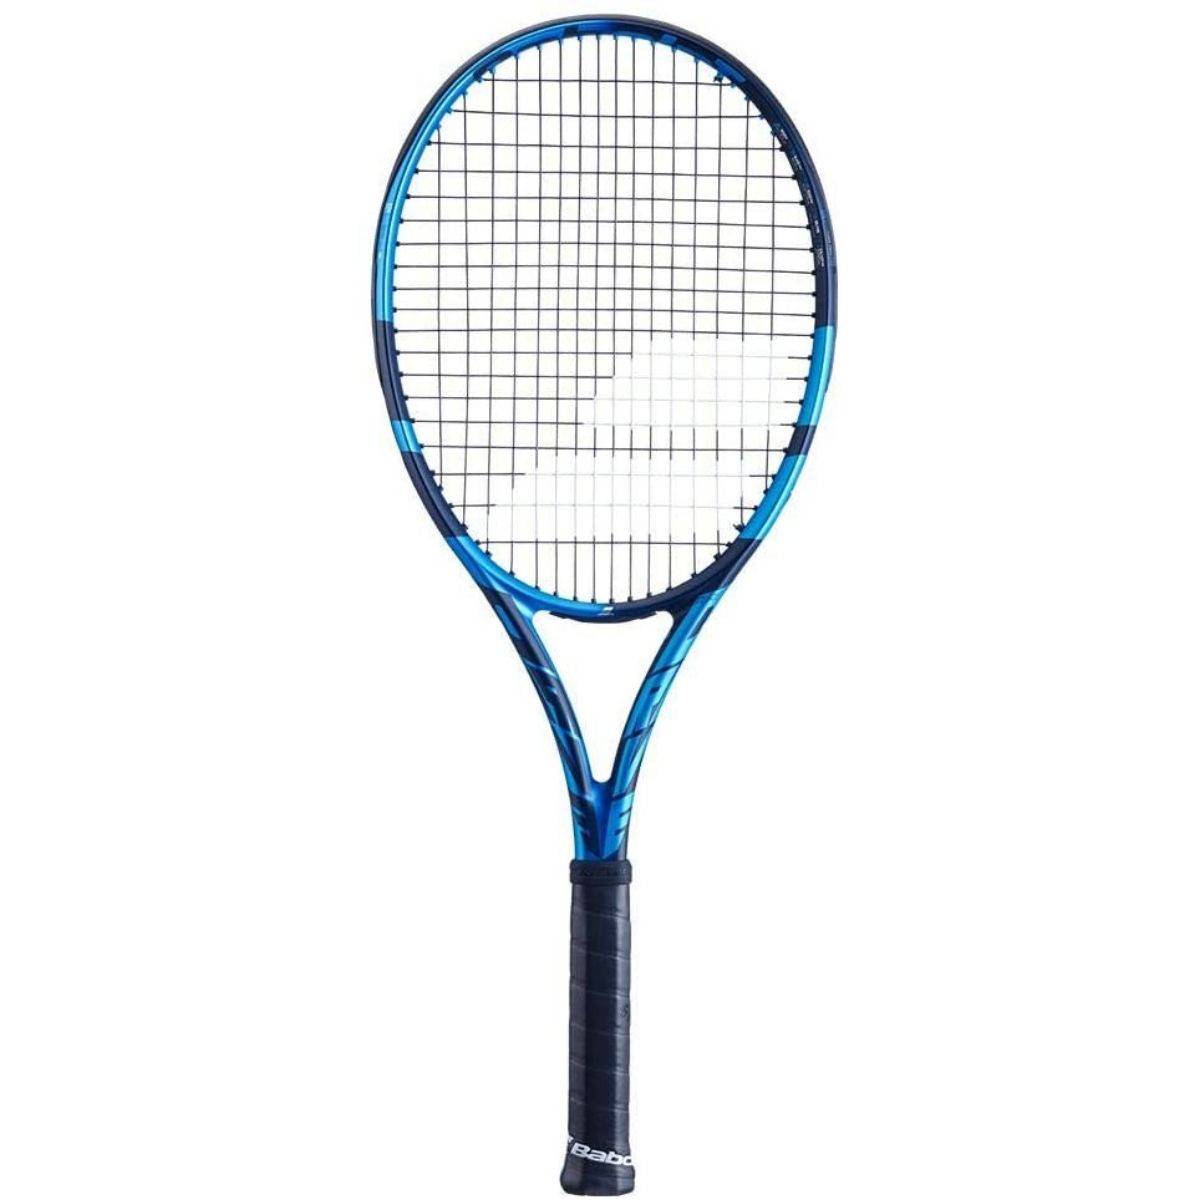 The Best Womens Tennis Rackets Option: Babolat Pure Drive 2021 Tennis Racket